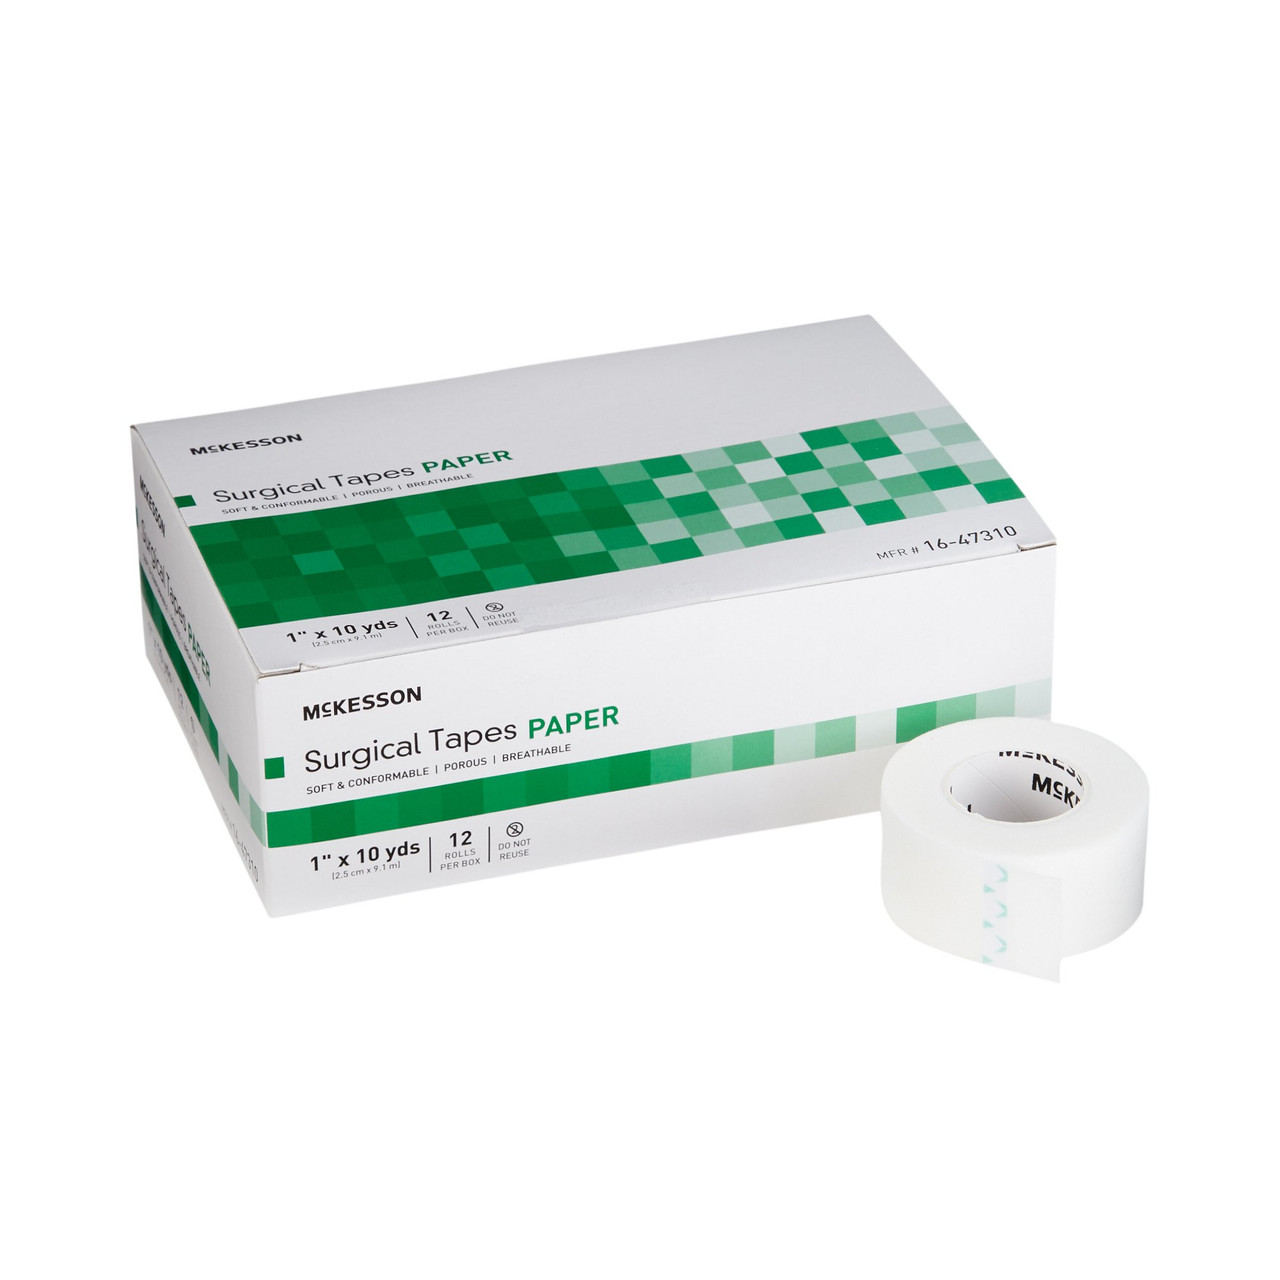 McKesson Paper Medical Tape, 2 inch x 10 Yard, White, Box-6